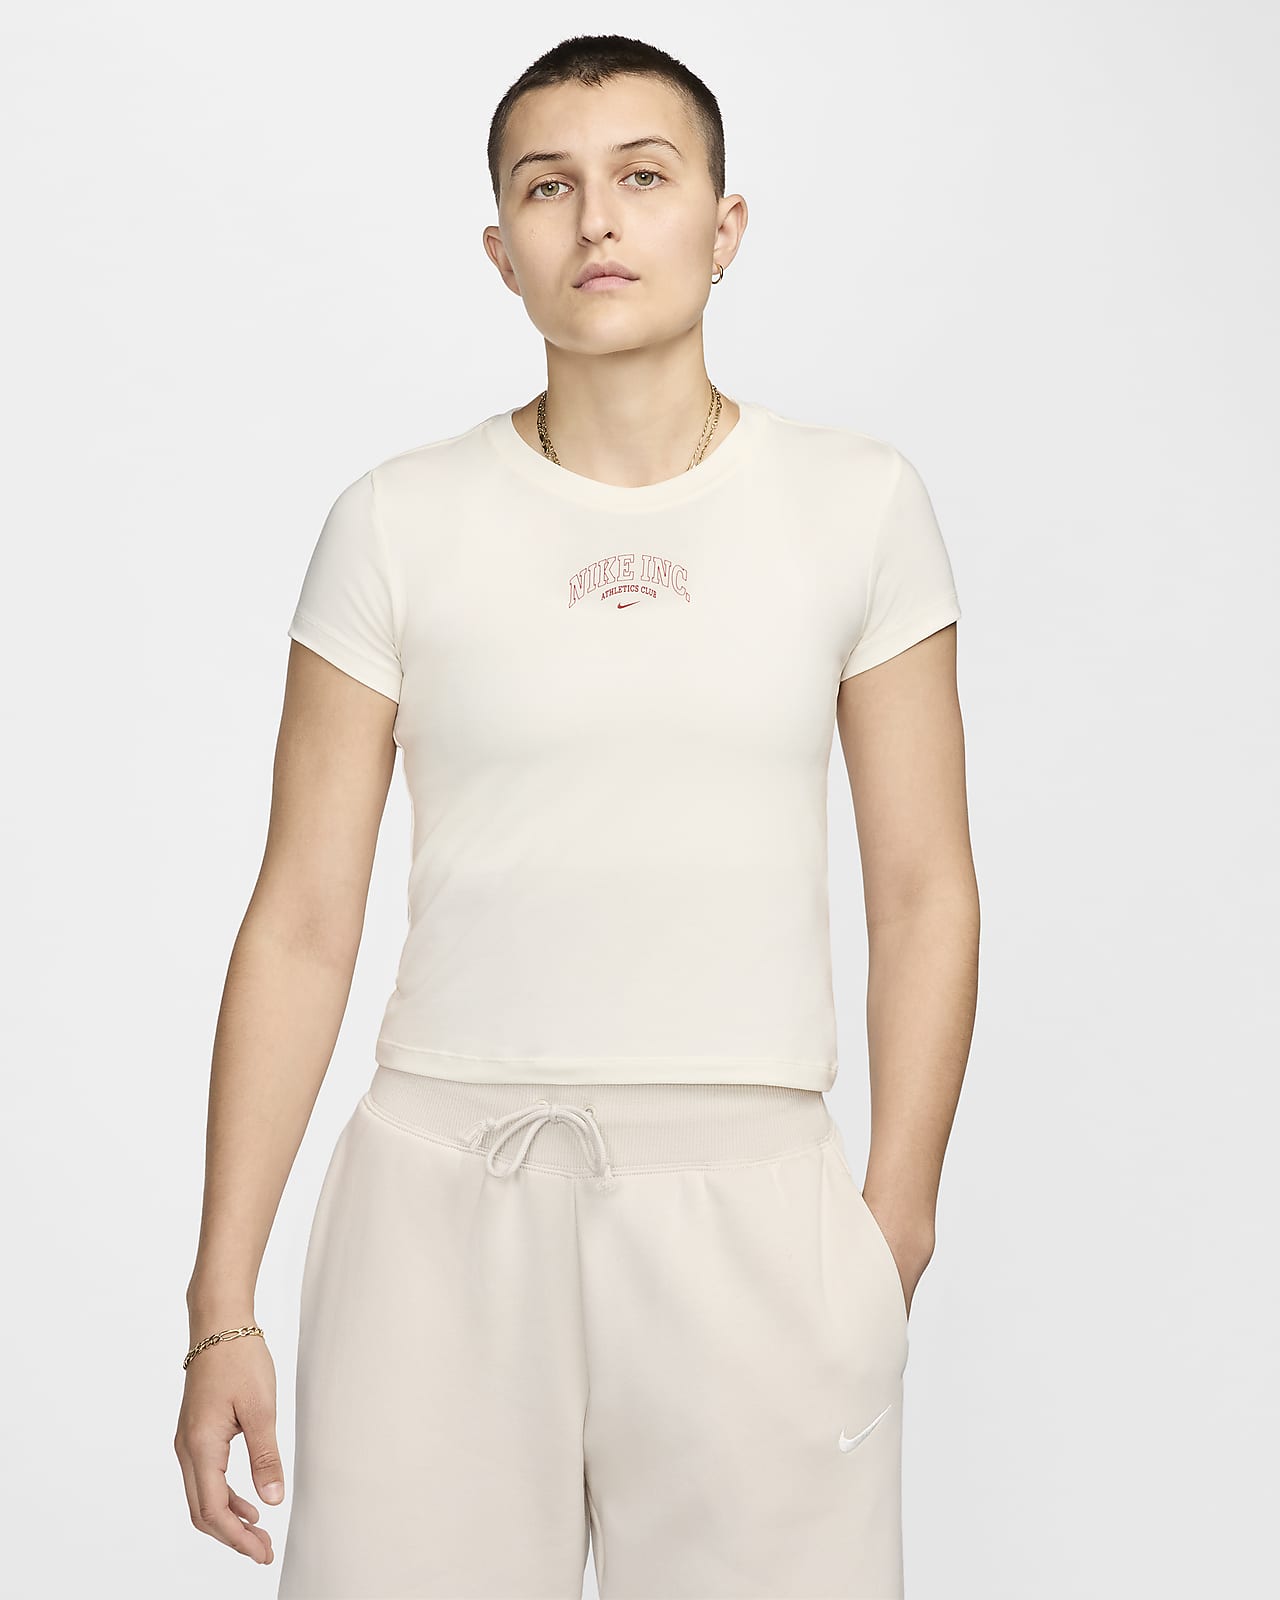 Nike Sportswear Chill Knit Women's Cropped T-Shirt